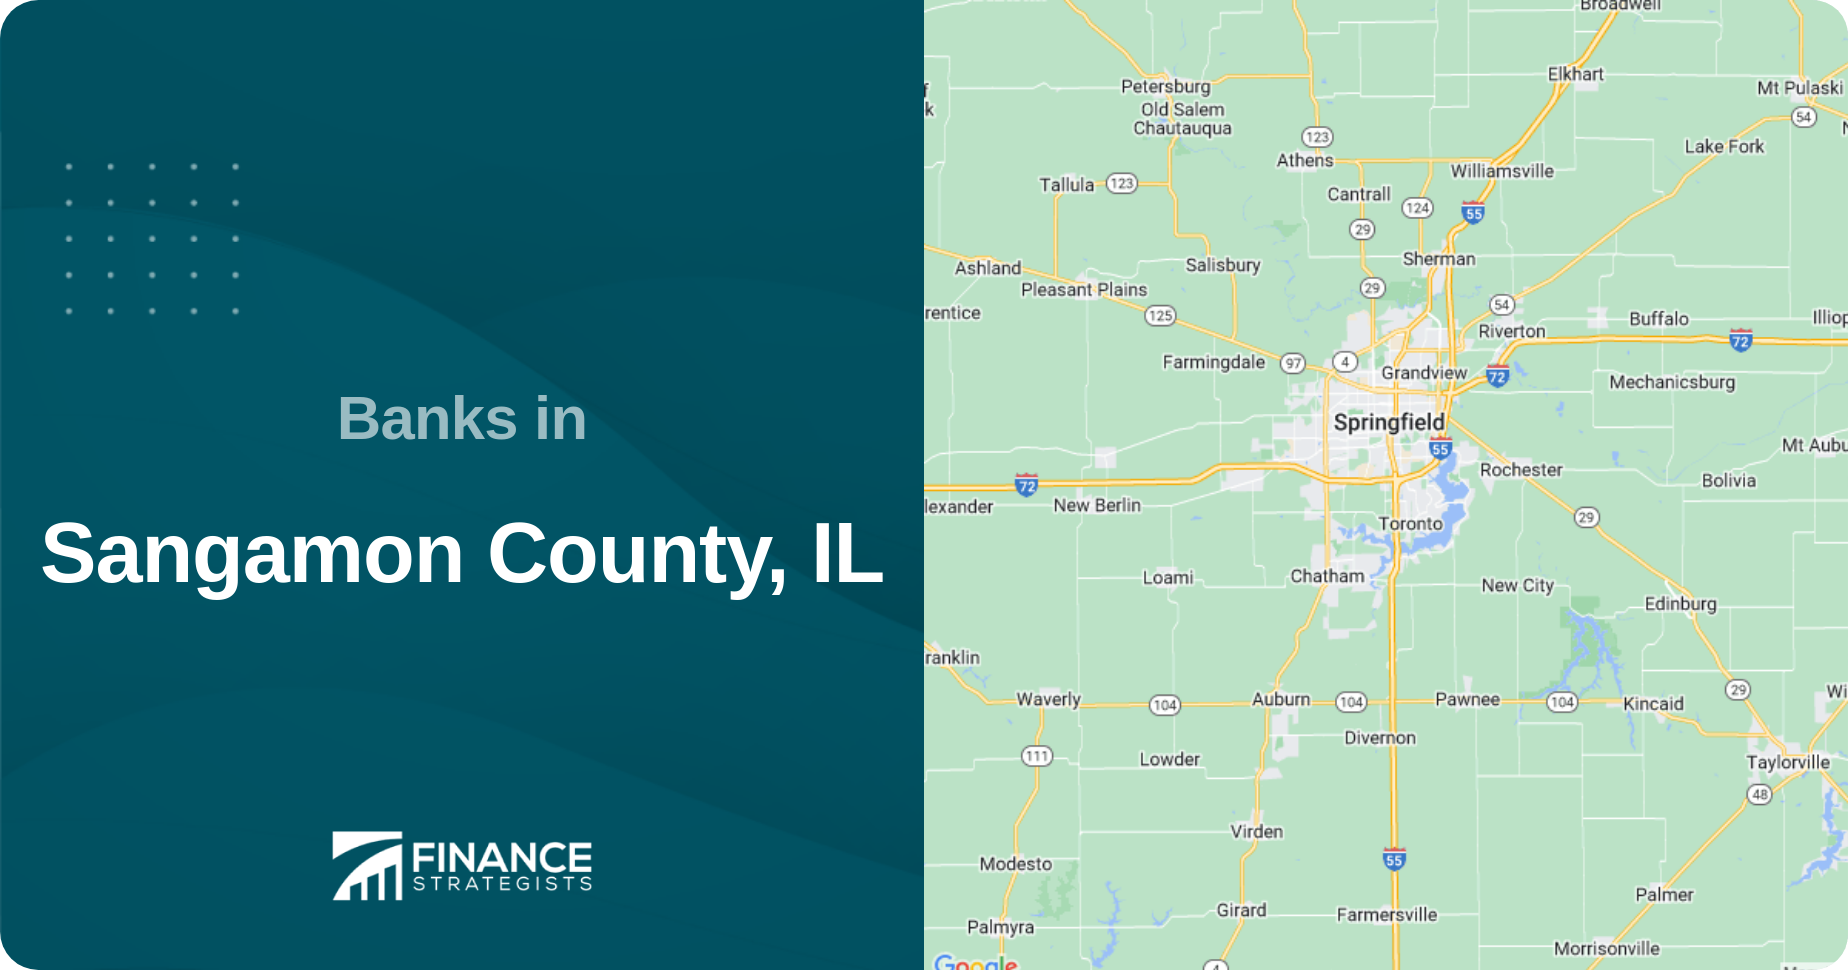 Banks in Sangamon County, IL